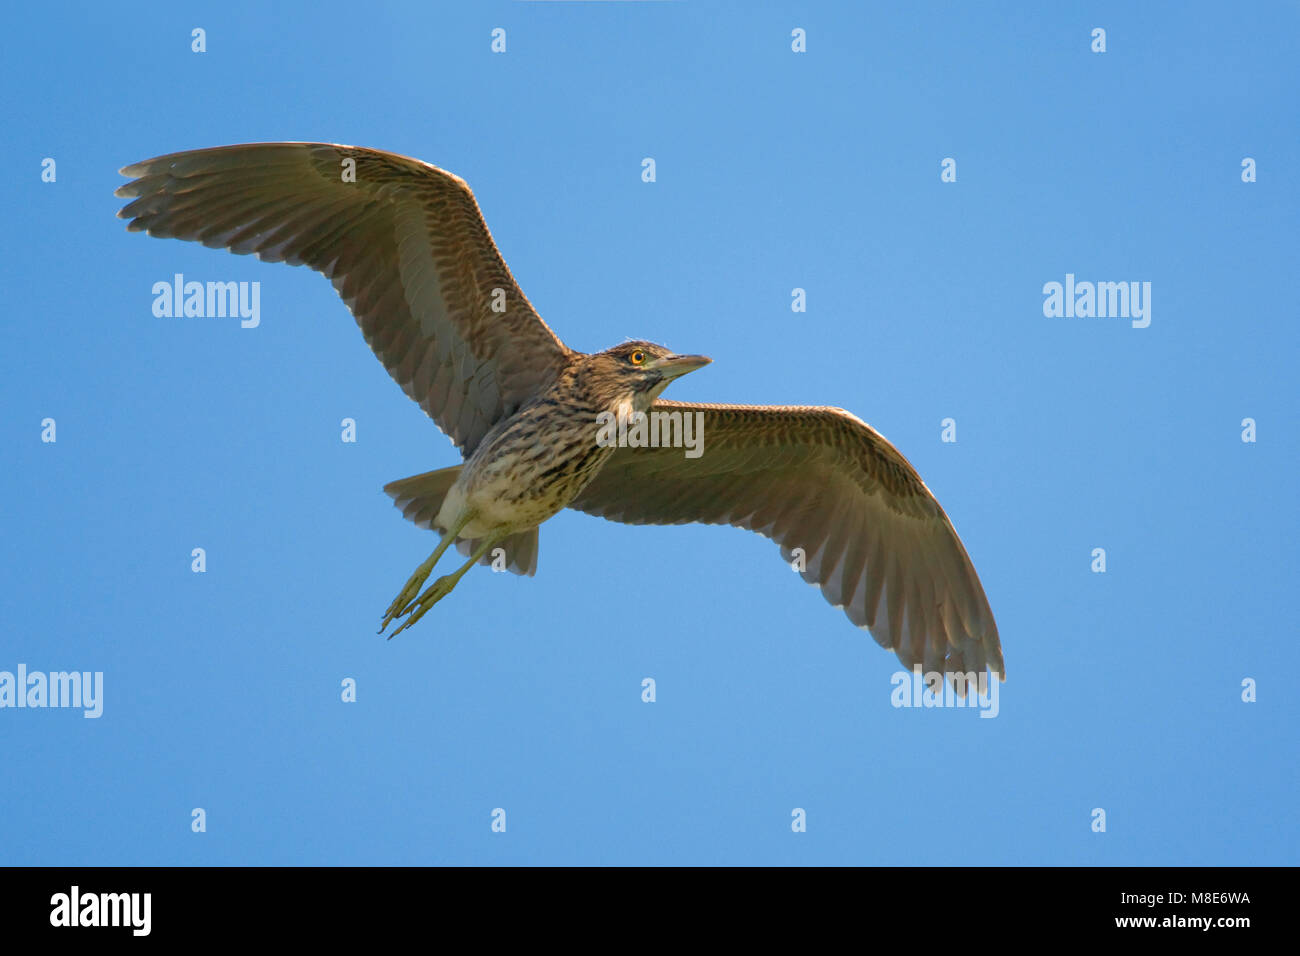 Kwak onvolwassen vliegend; negro coronado noche juvenil Heron volando Foto de stock